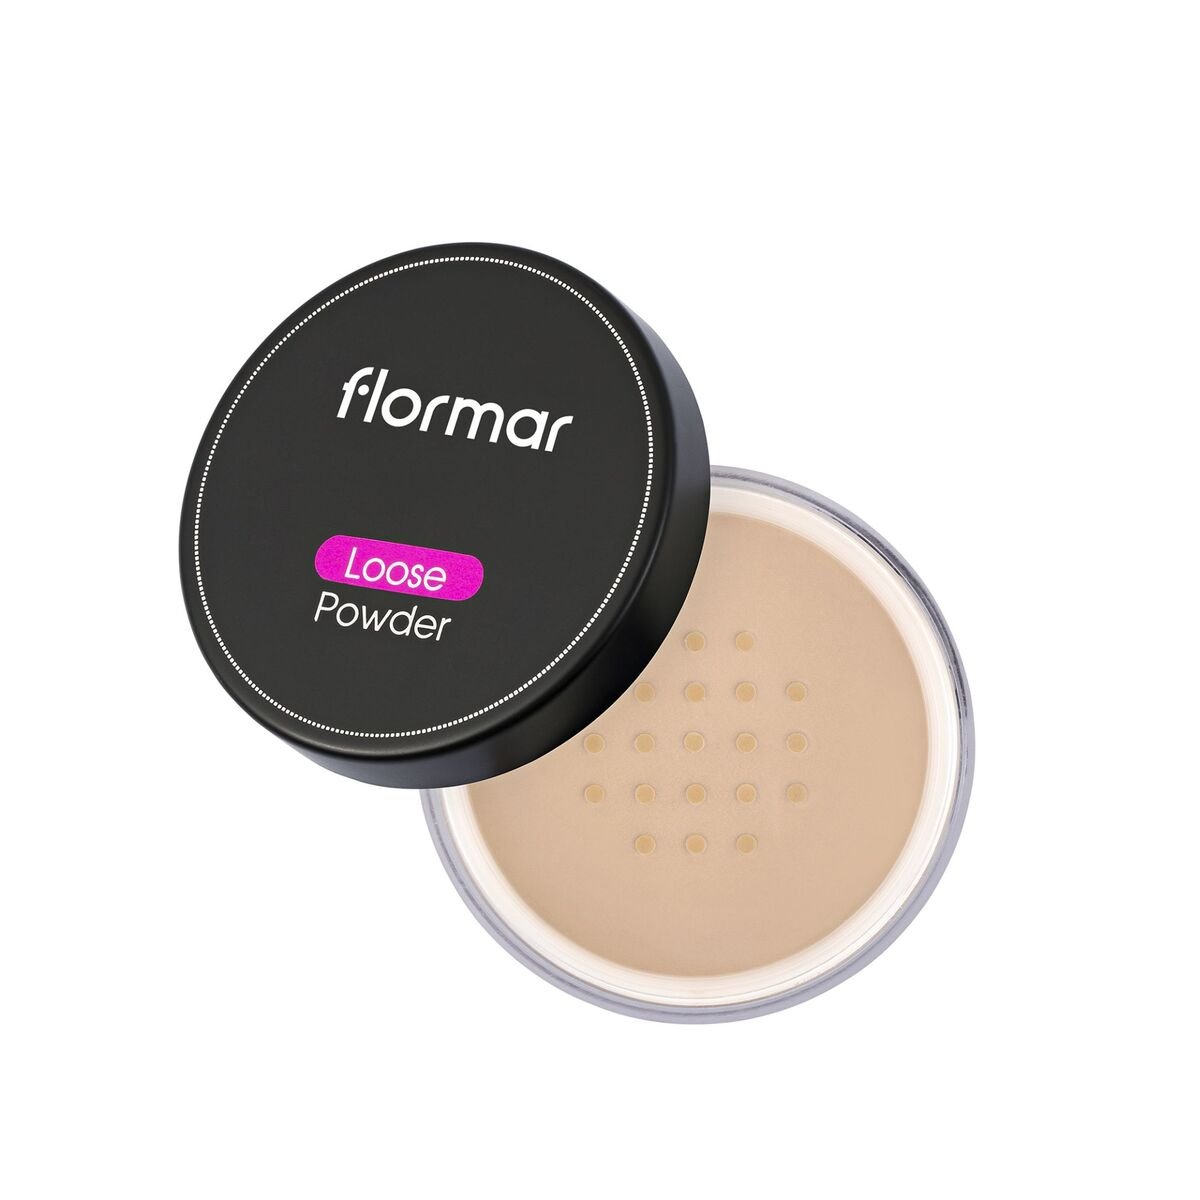 Flormar Loose Powder, Medium Sand